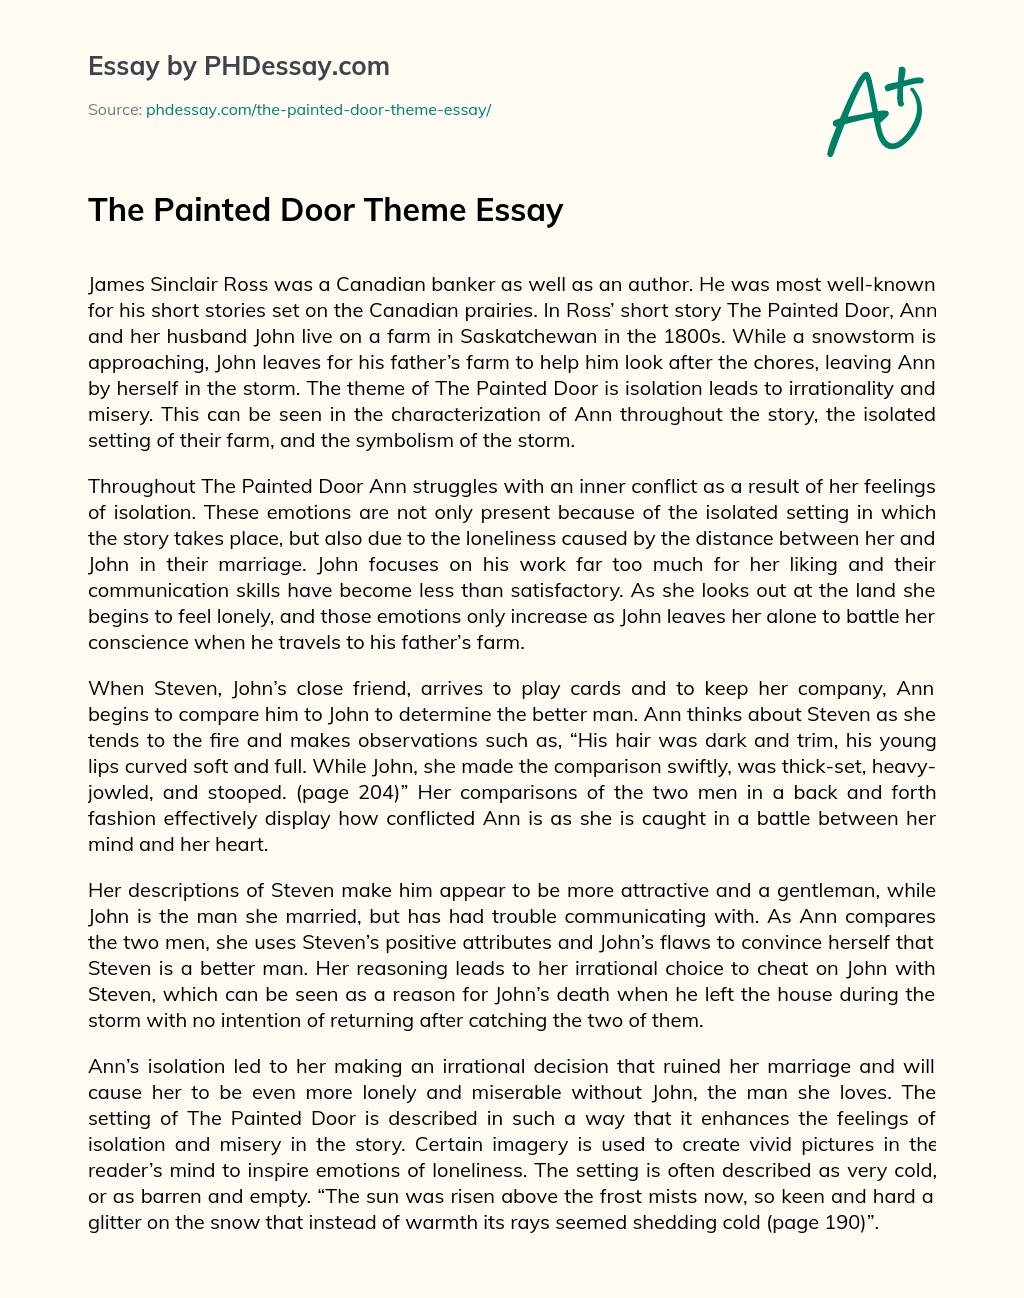 The Painted Door Theme Essay essay